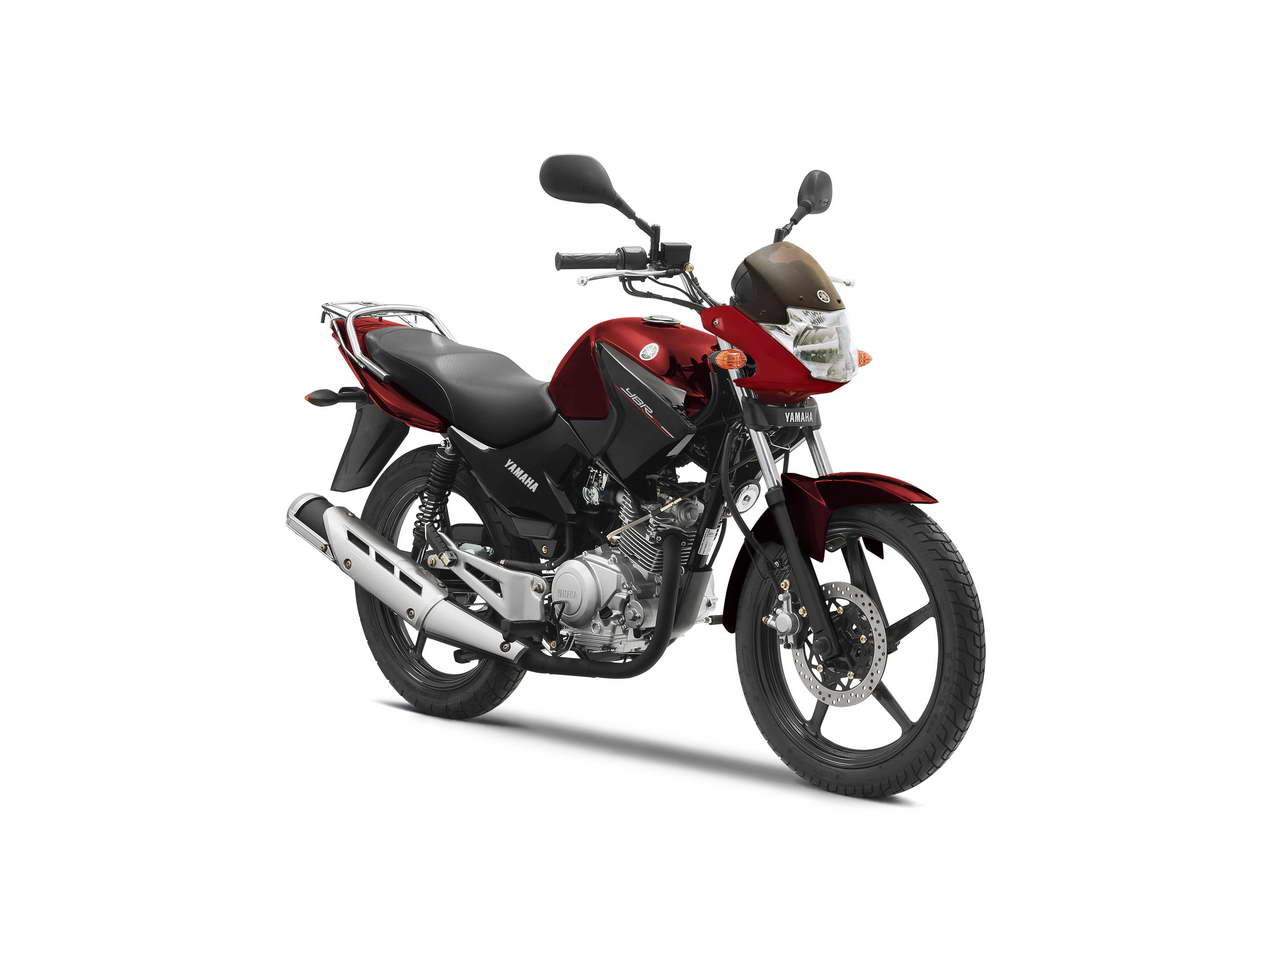 Listino Yamaha Fazer 8 Turismo - image 14268_1 on https://moto.motori.net